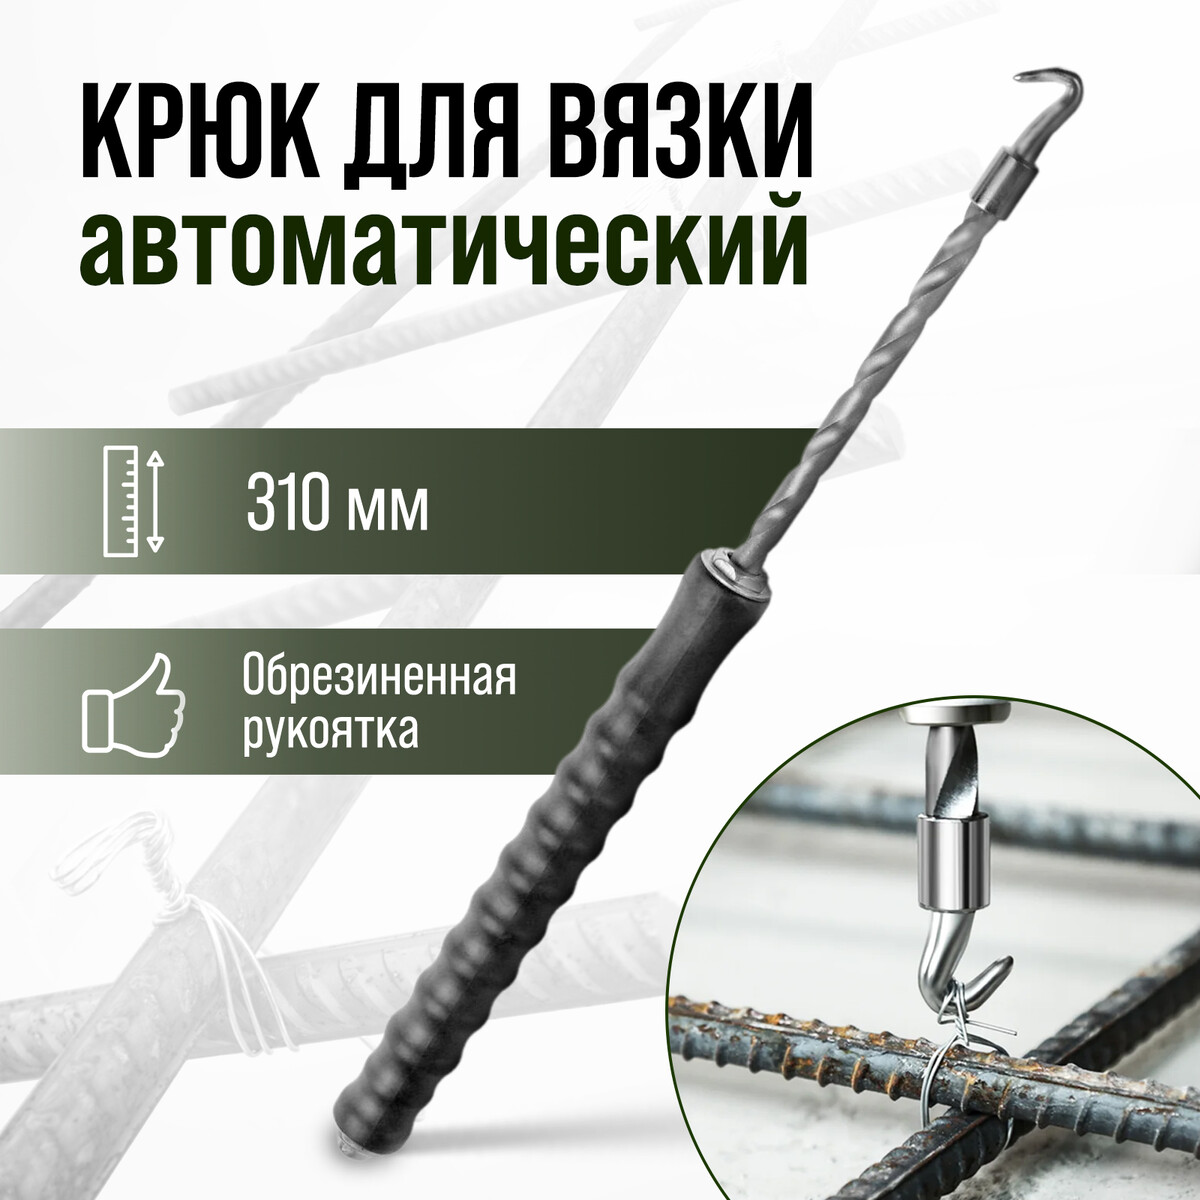 Крюк для вязки арматуры тундра, автоматический, обрезиненная рукоятка, 310 мм топор колун bartex рукоятка фибергласовая обрезиненная 3 6 кг 905 мм